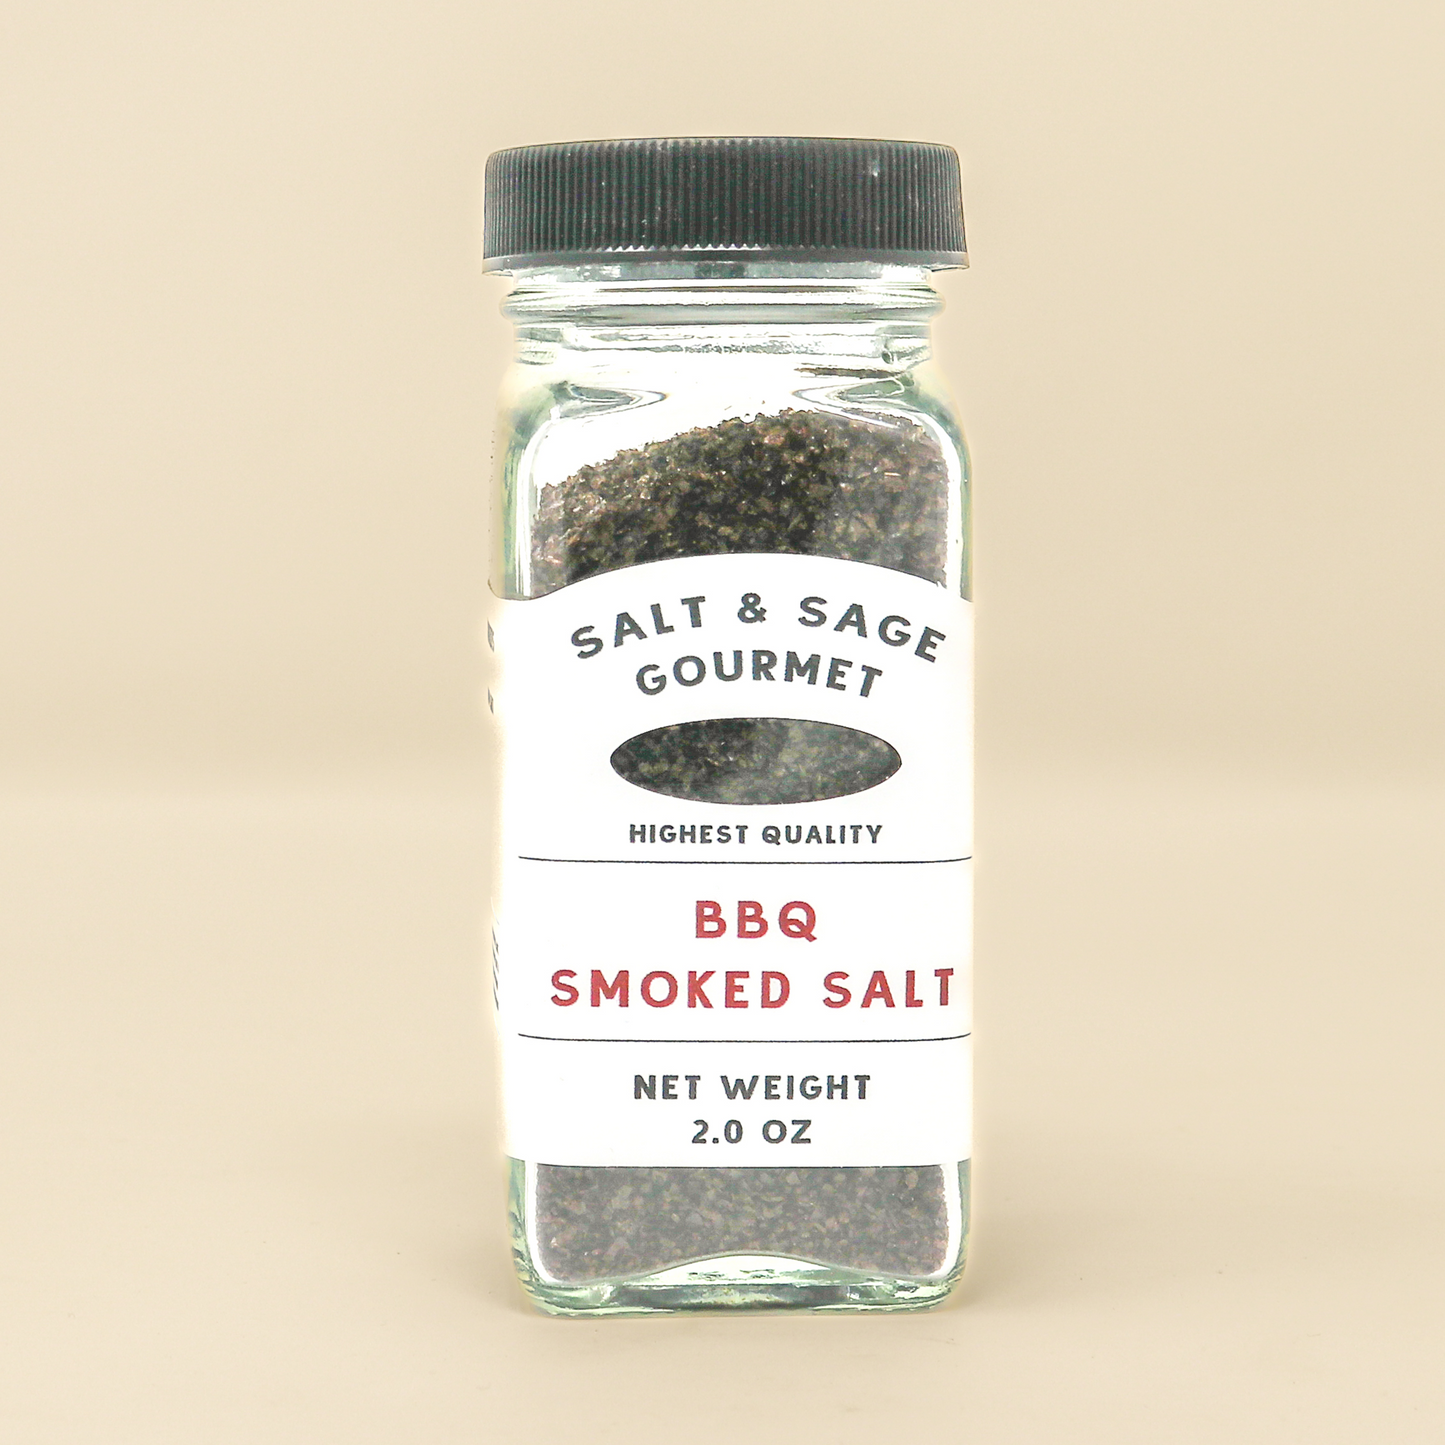 BBQ Smoked Salt